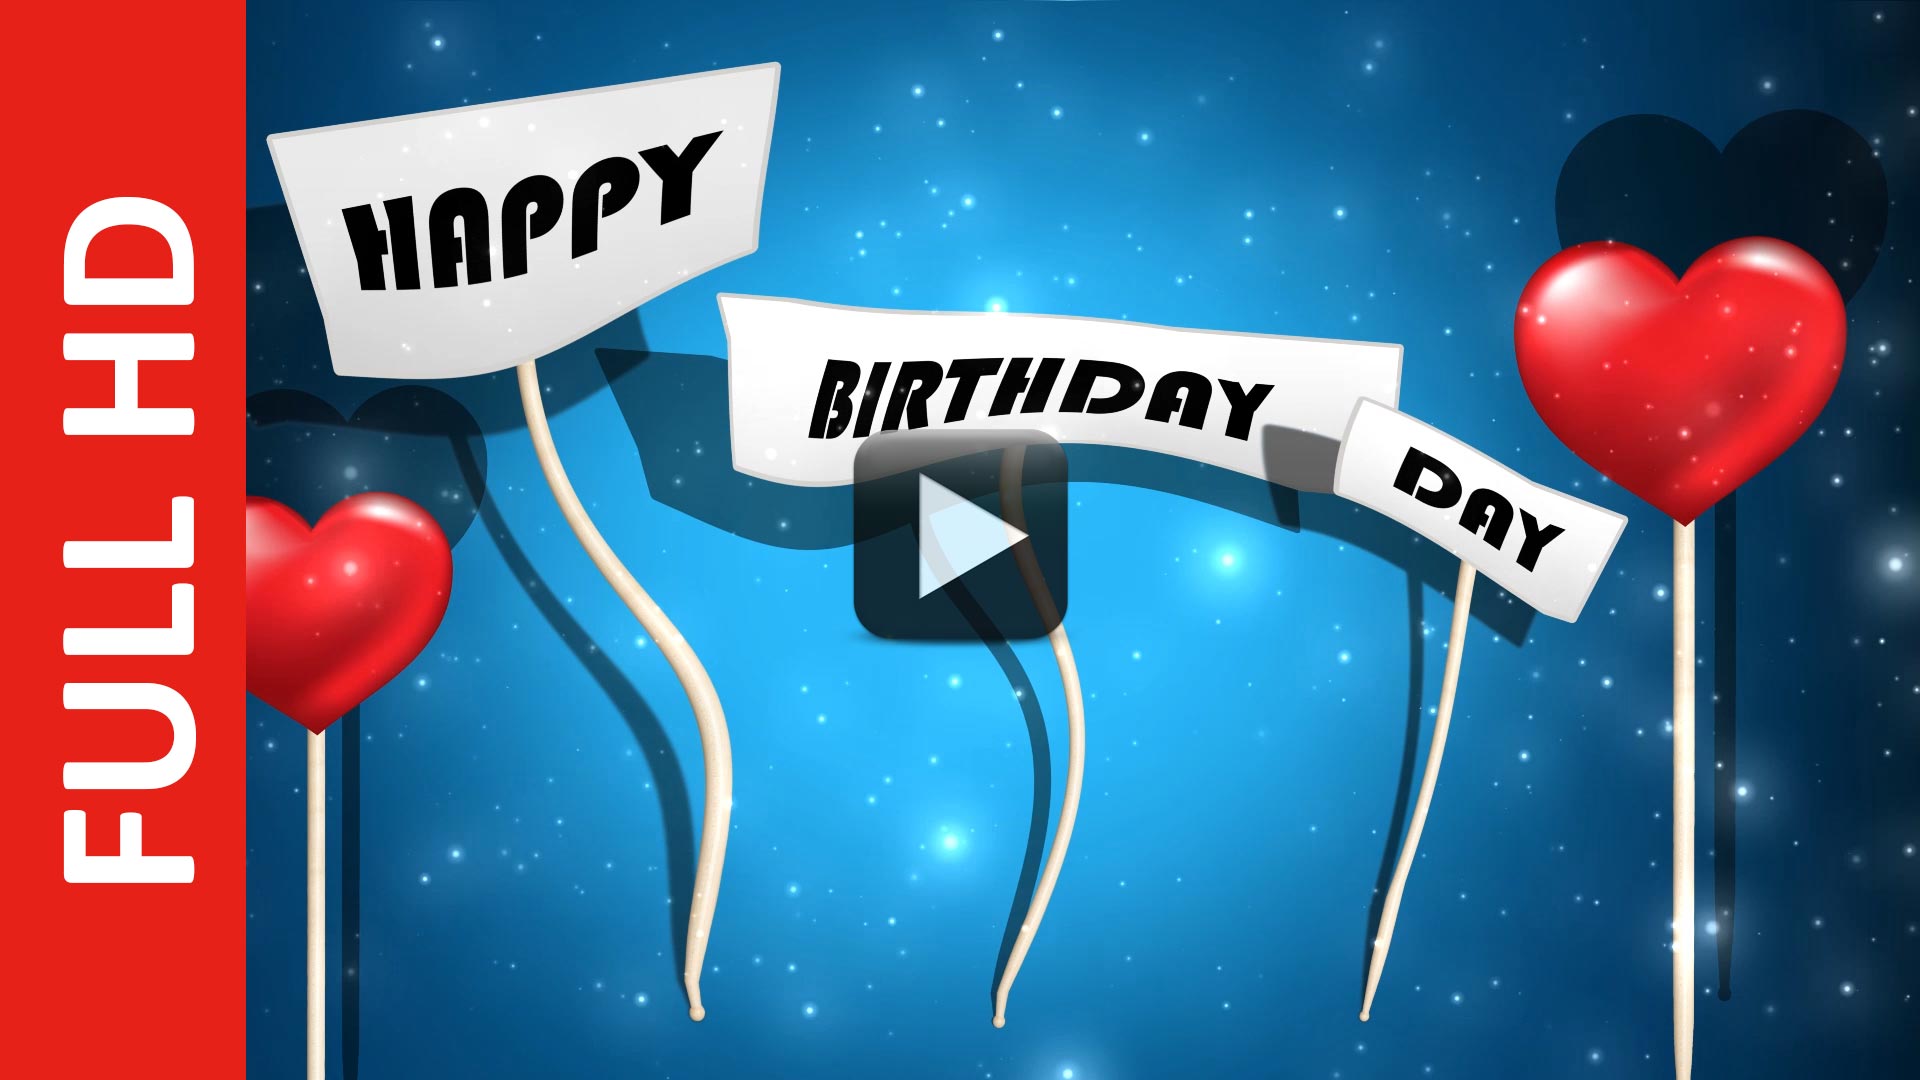 New Happy Birthday Background Video | All Design Creative